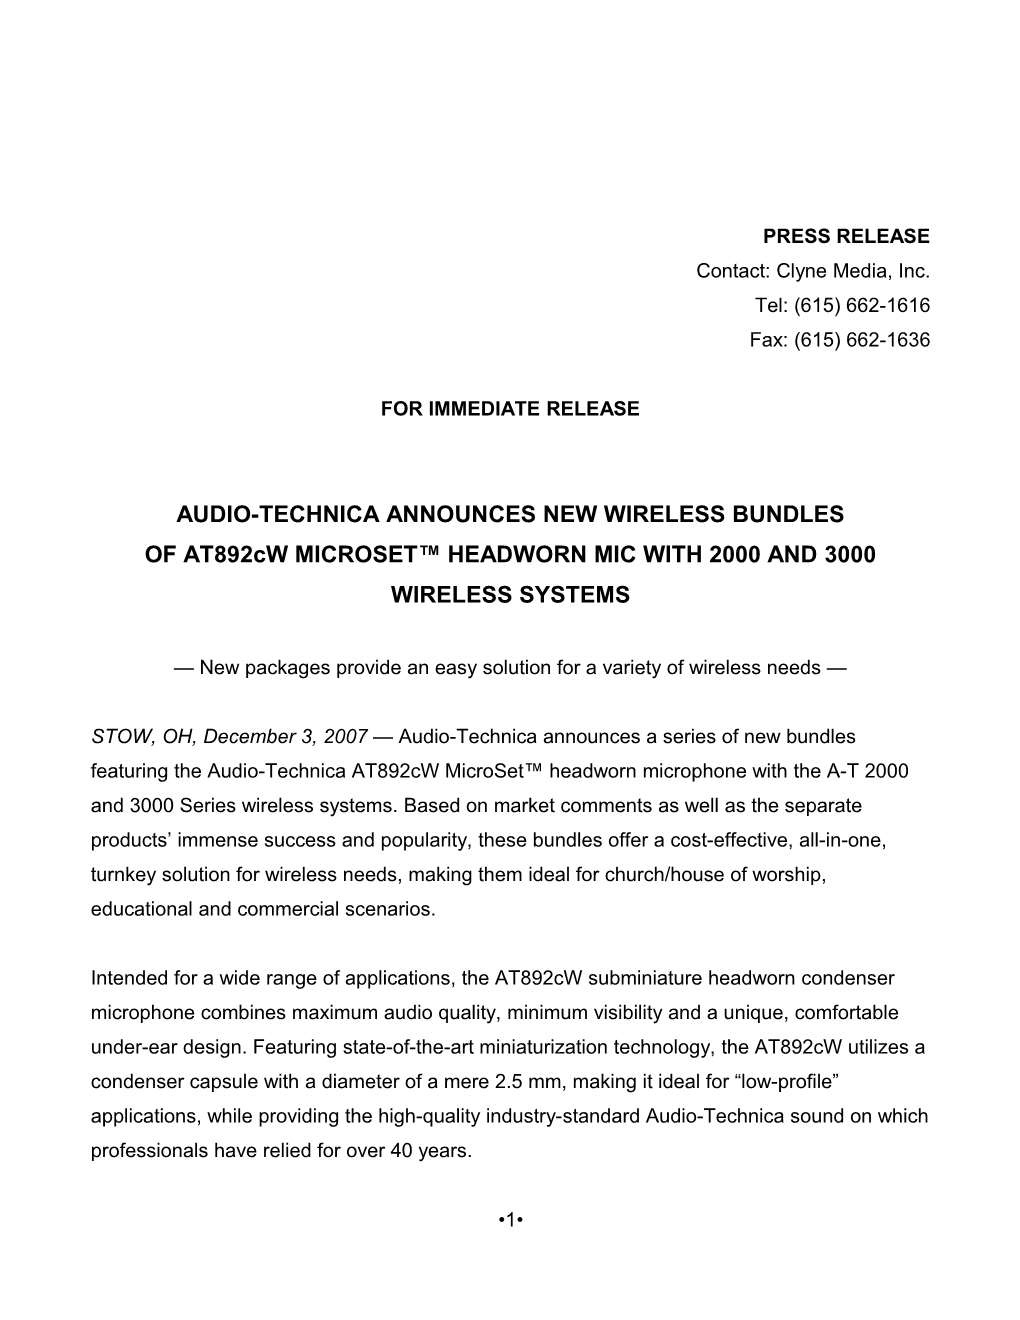 Audio-Technica Announces New Wireless Bundles